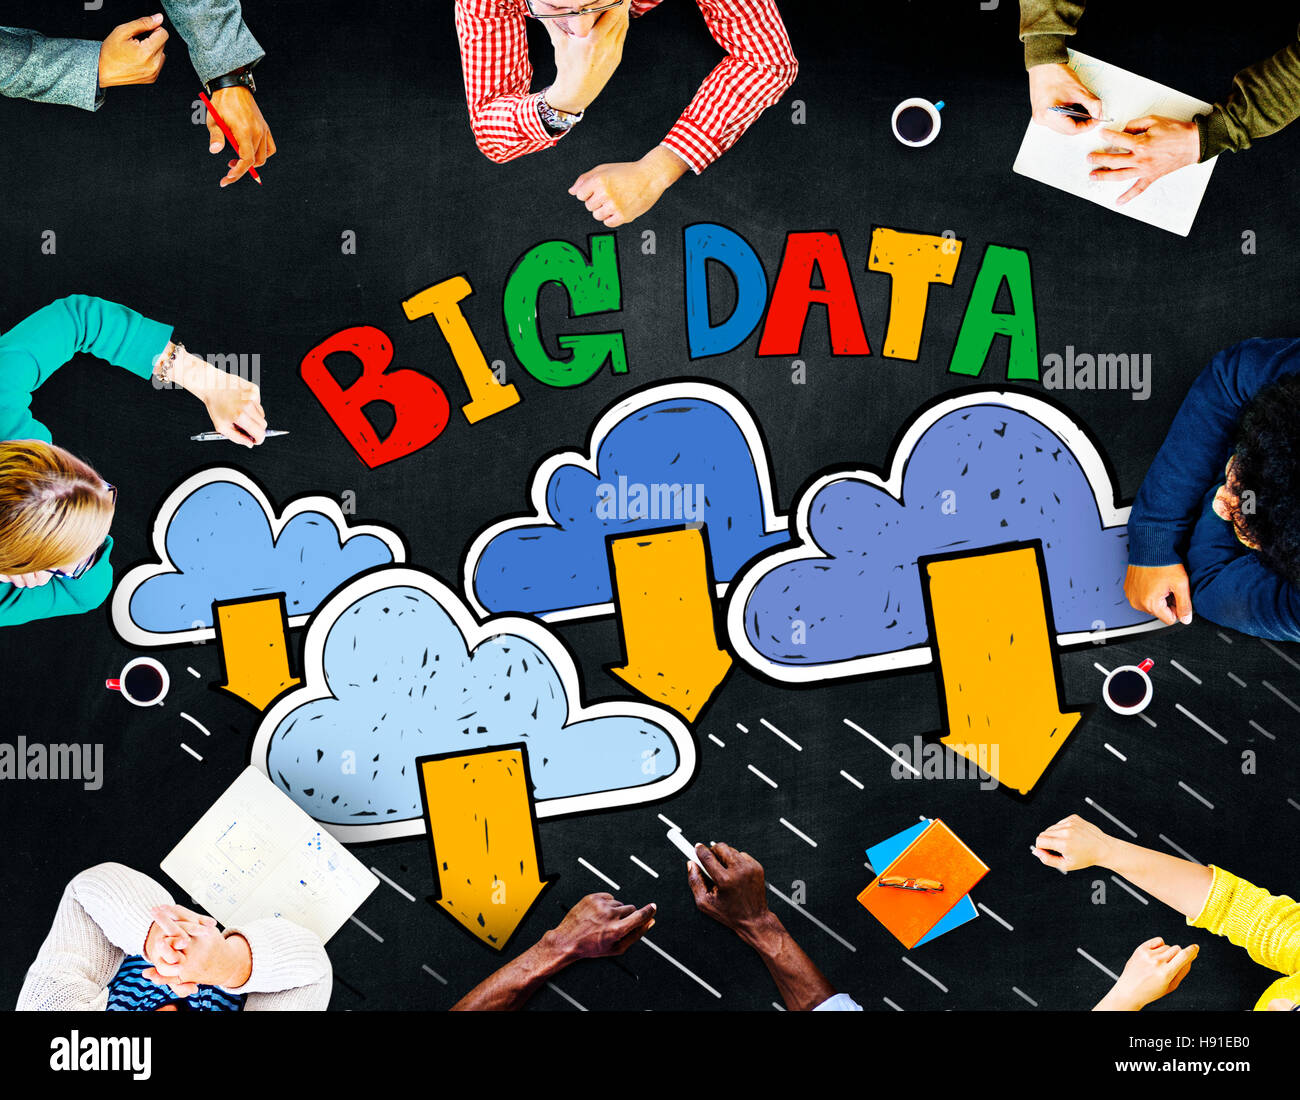 Big Data Storage Database Download Concept Stock Photo